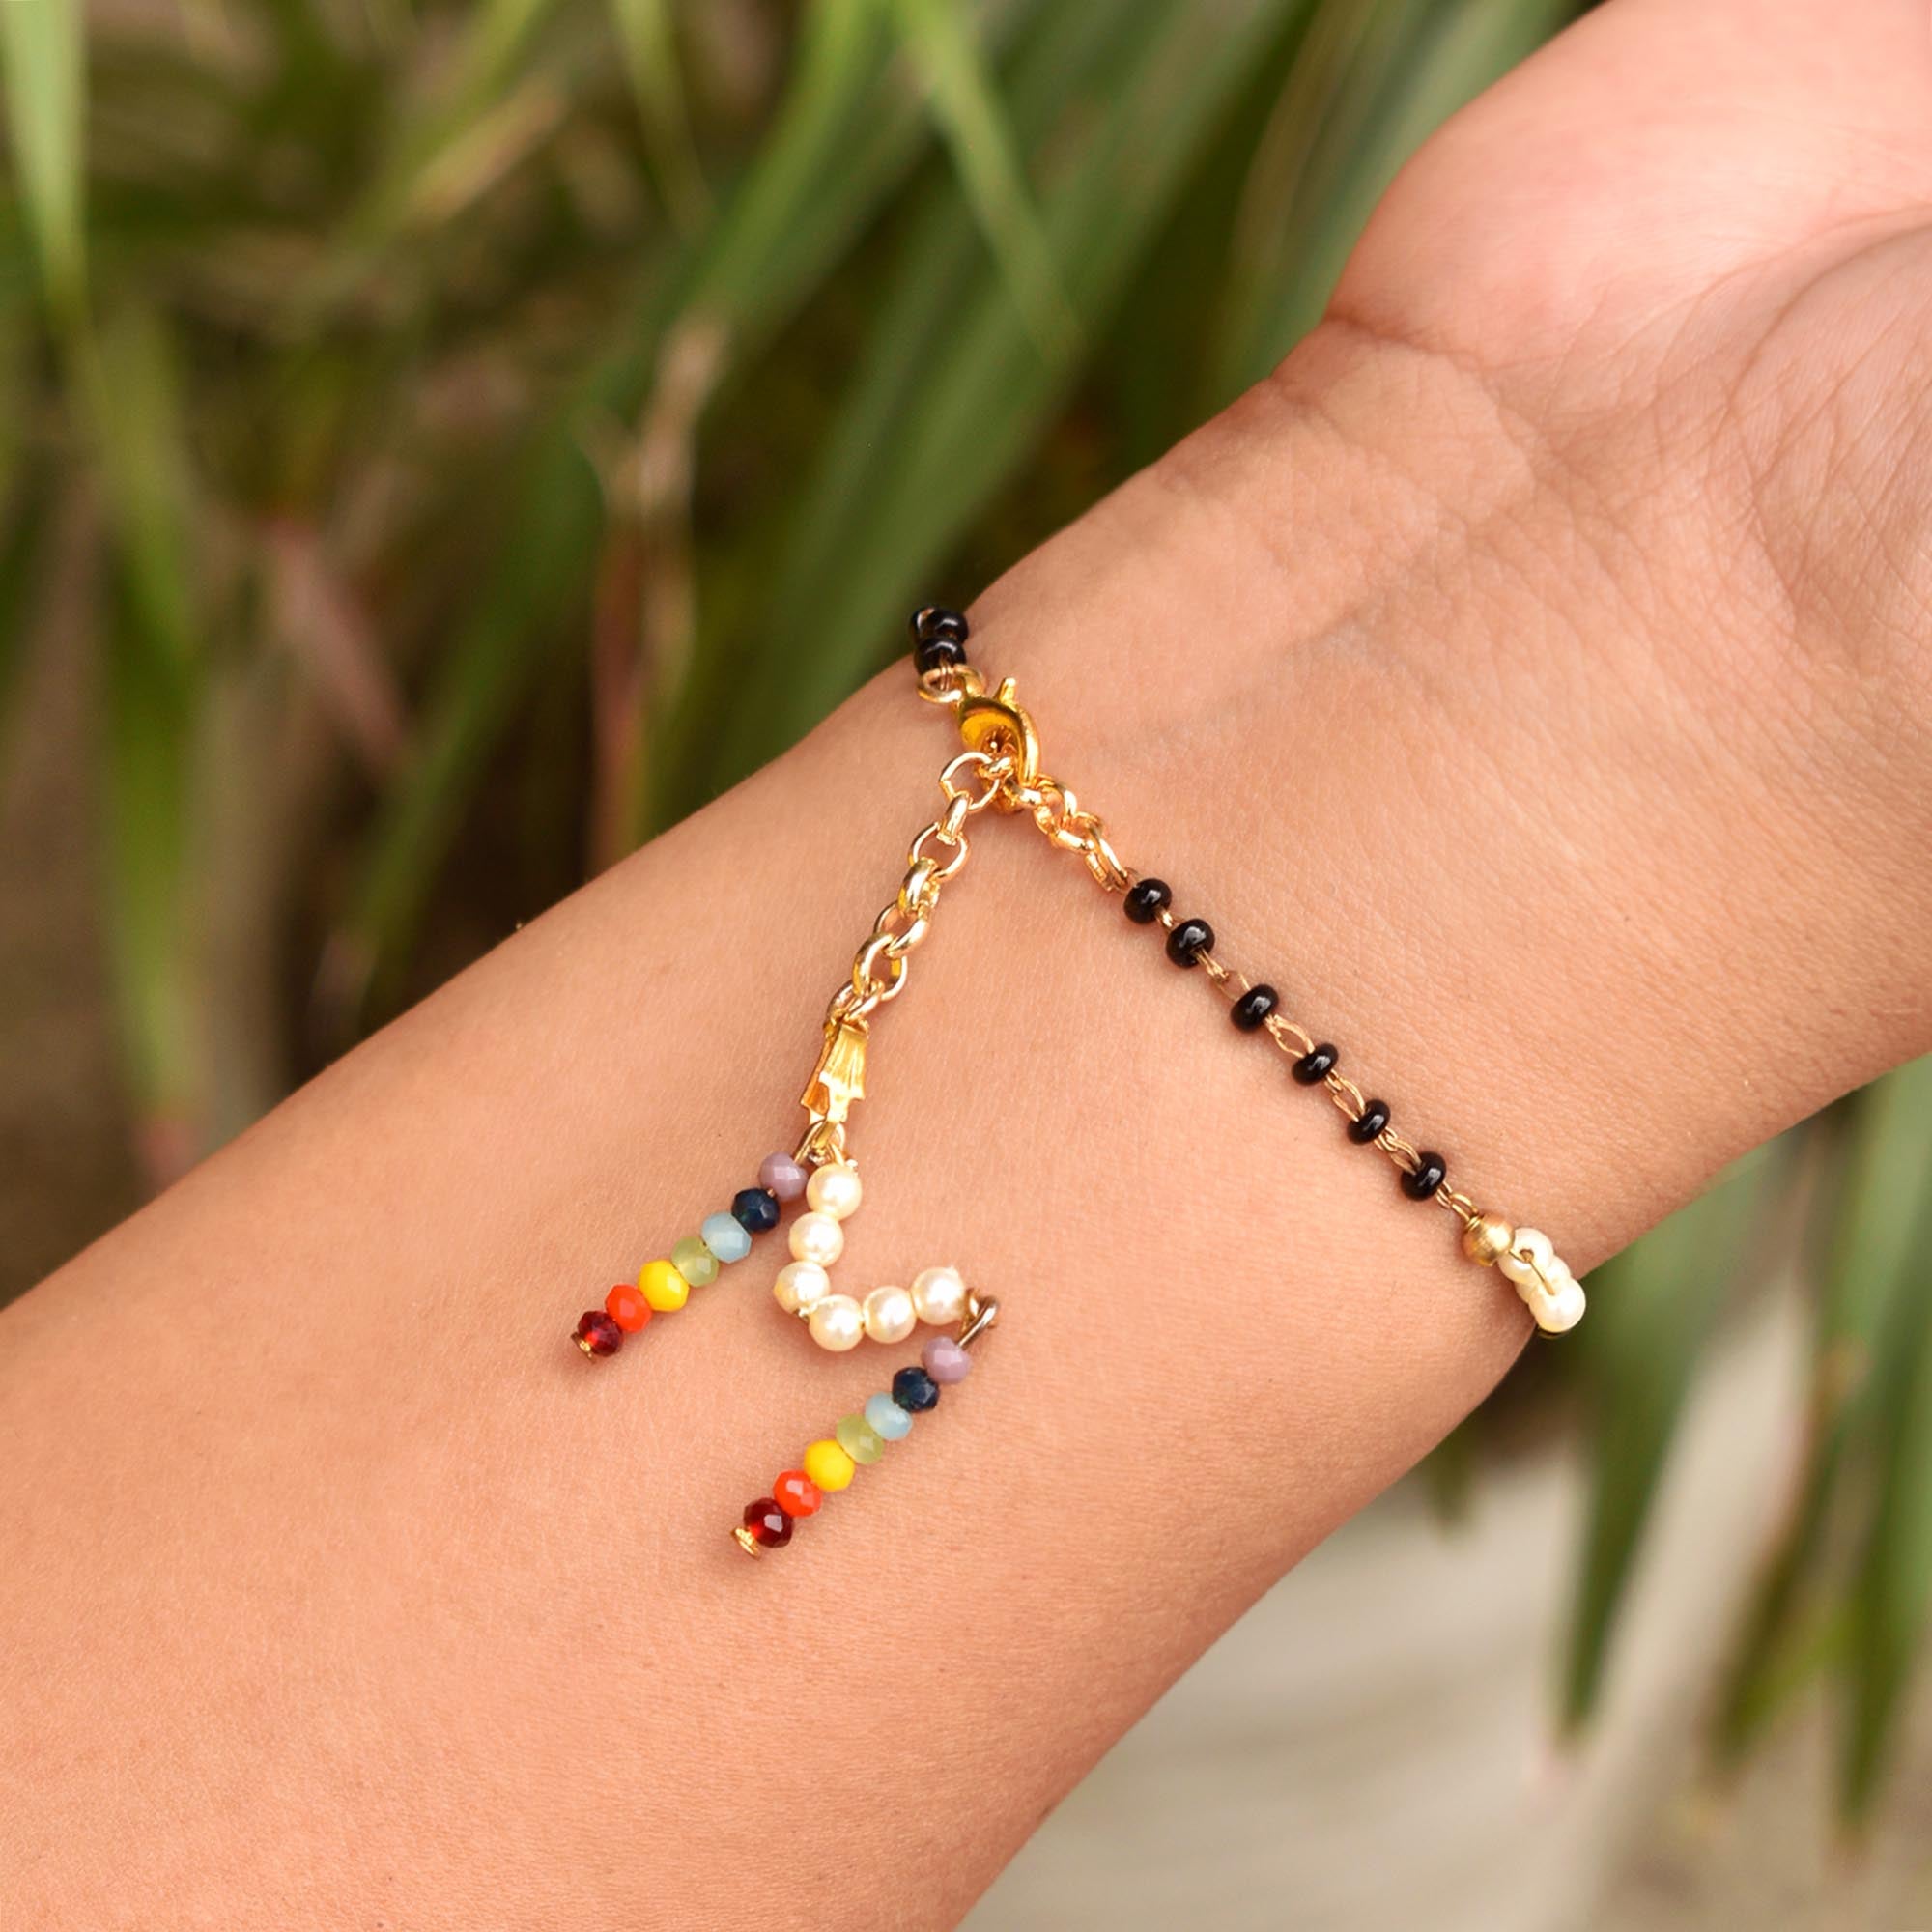 colorful beads mangalsutra bracelet